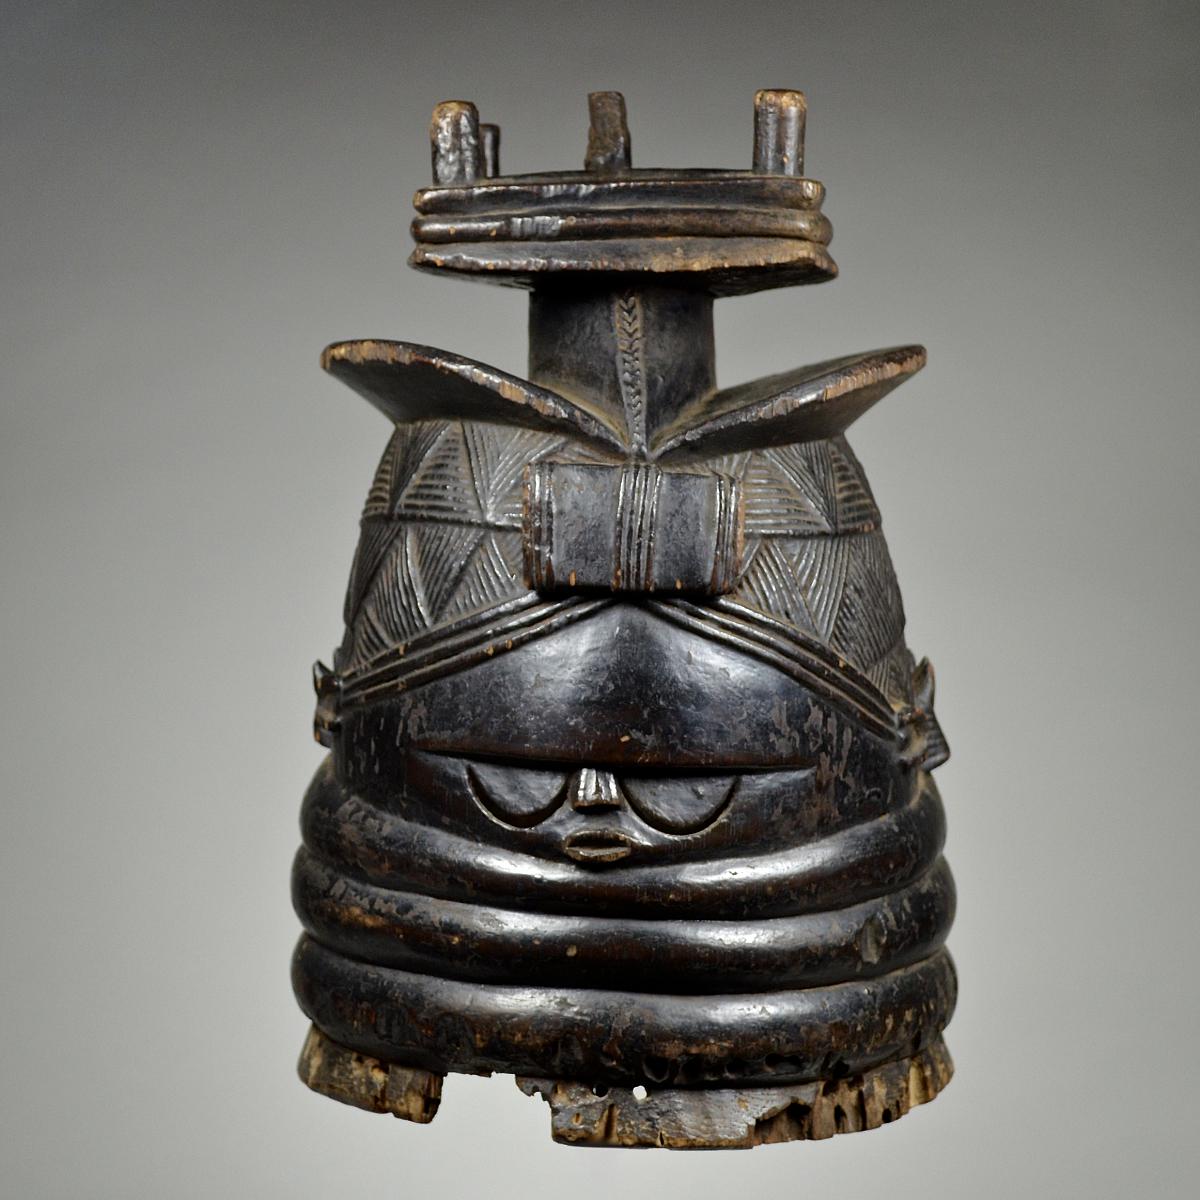 Sowei mask 'Bundu' of the Sande Society